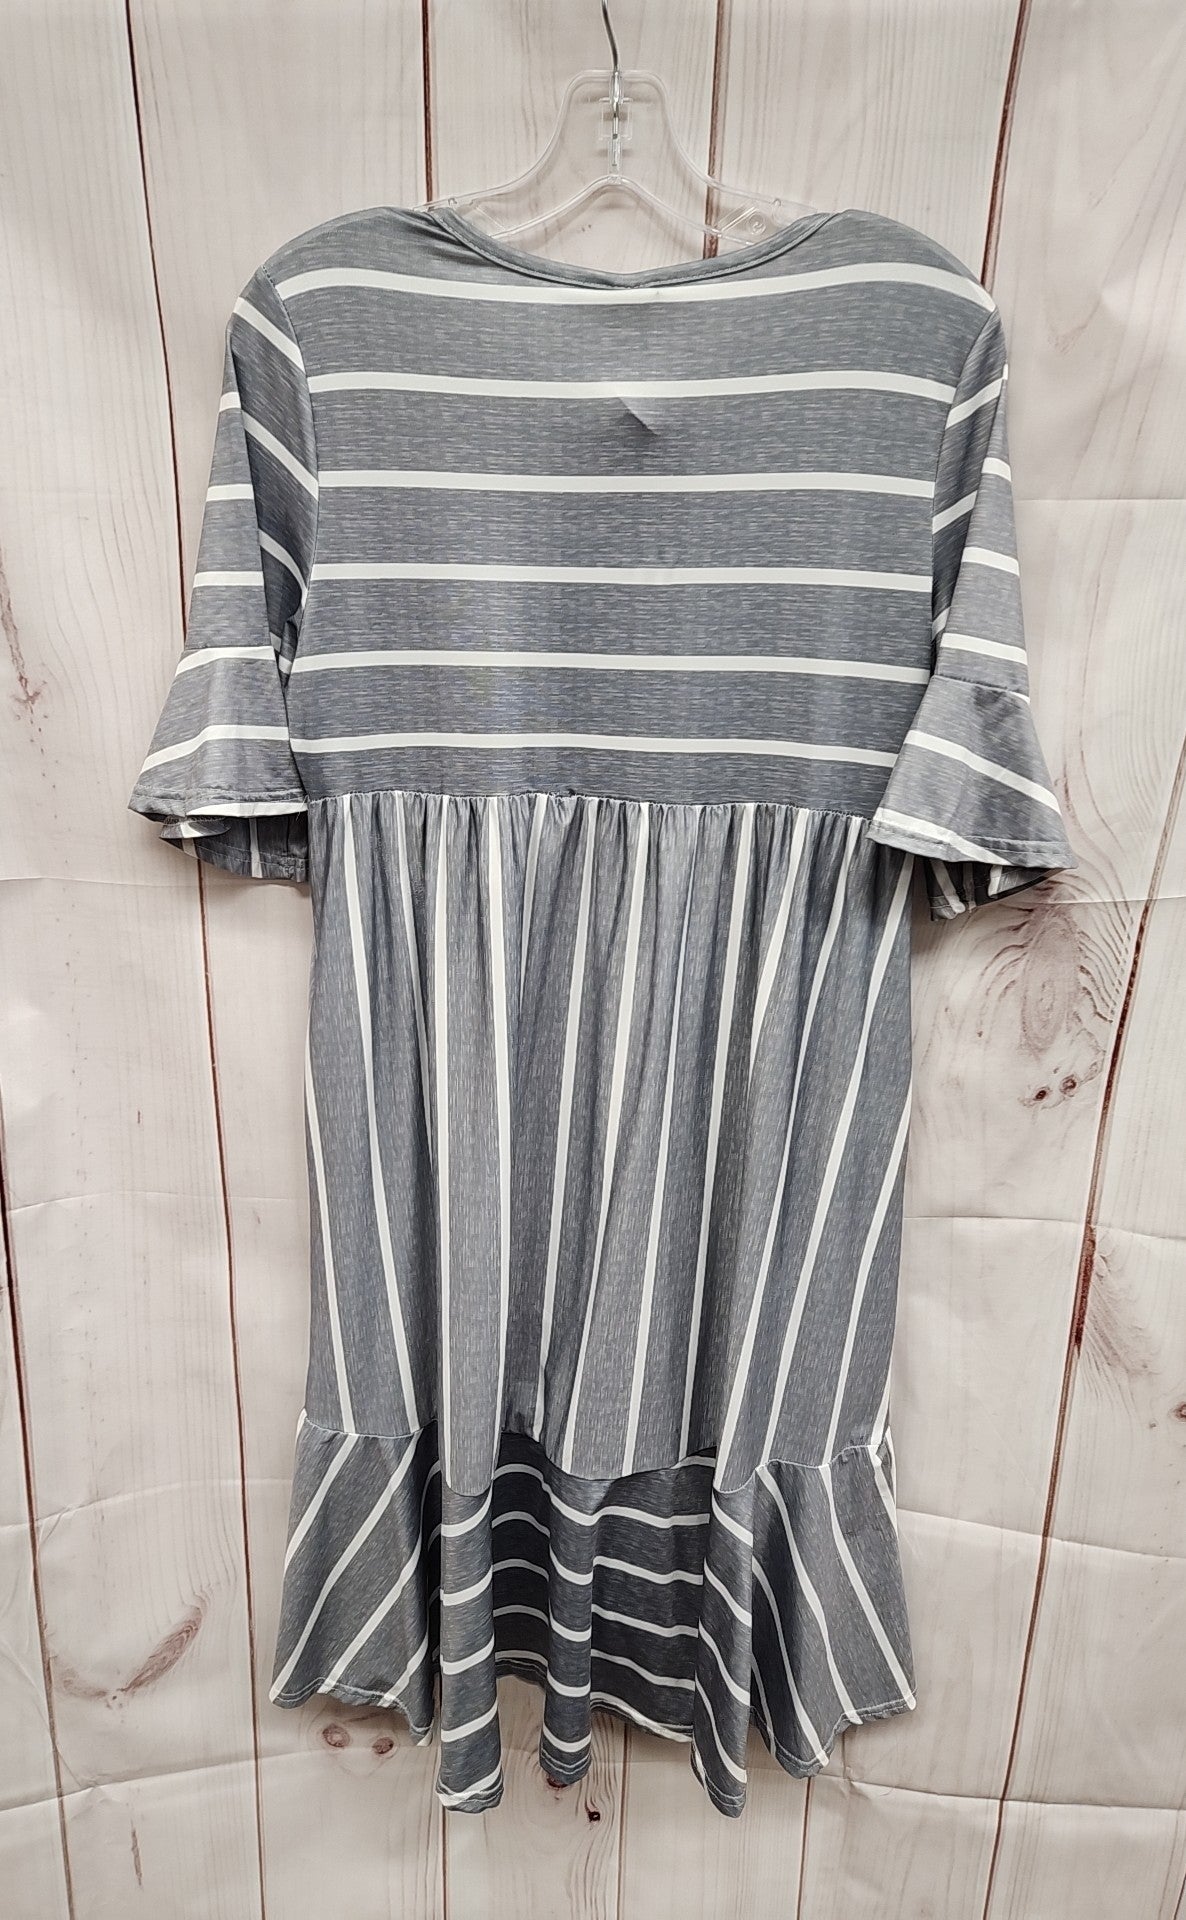 Ealey Fushi Women's Size S Gray Dress